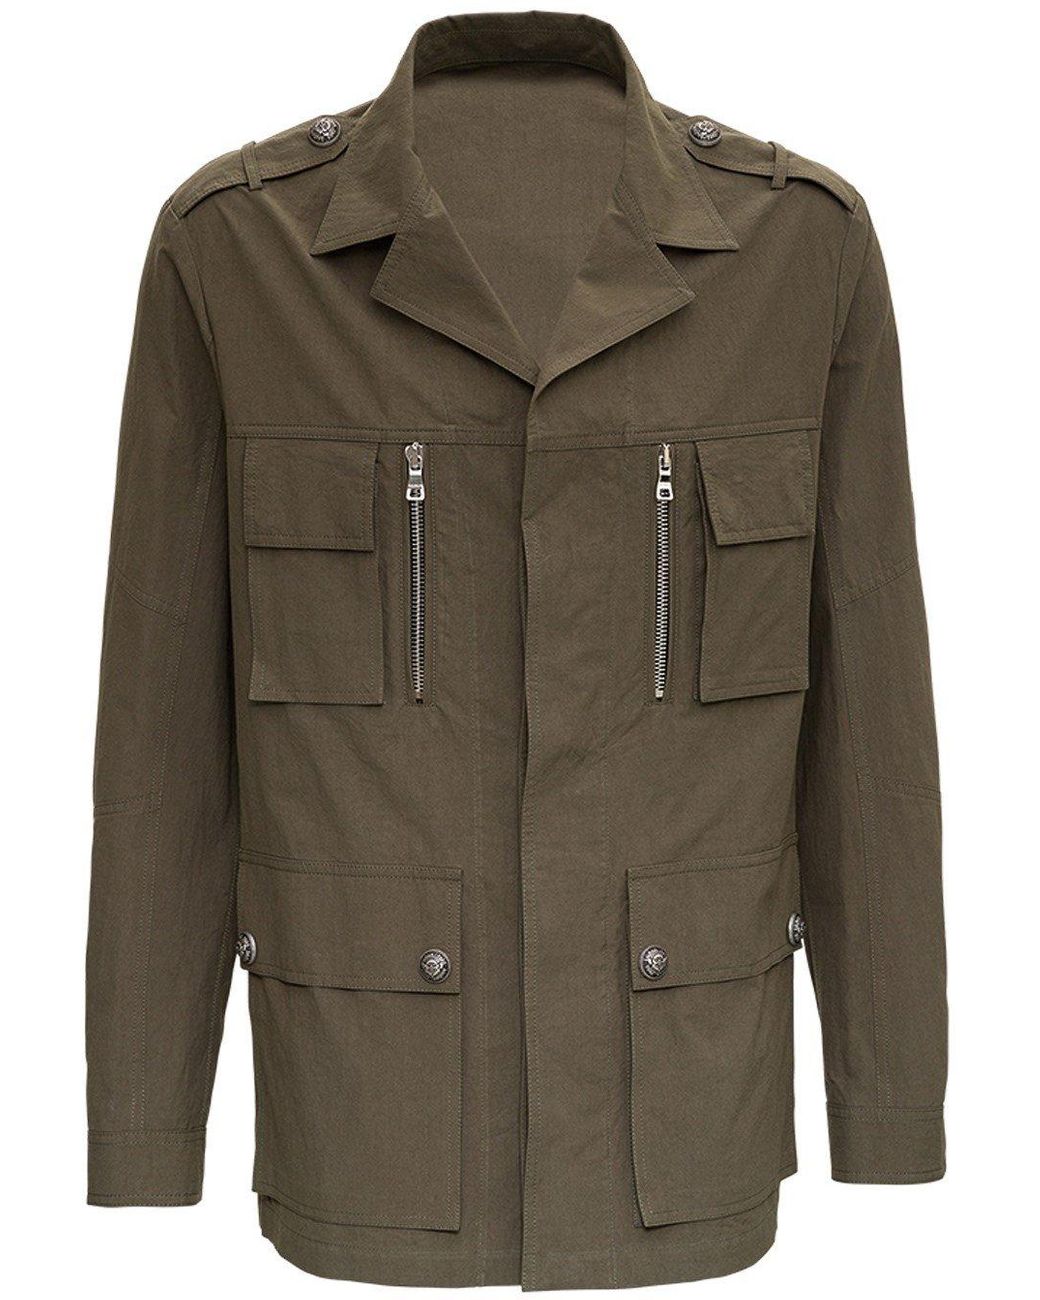 Balmain Cotton Zipped Detail Jacket in Green for Men - Save 7% - Lyst